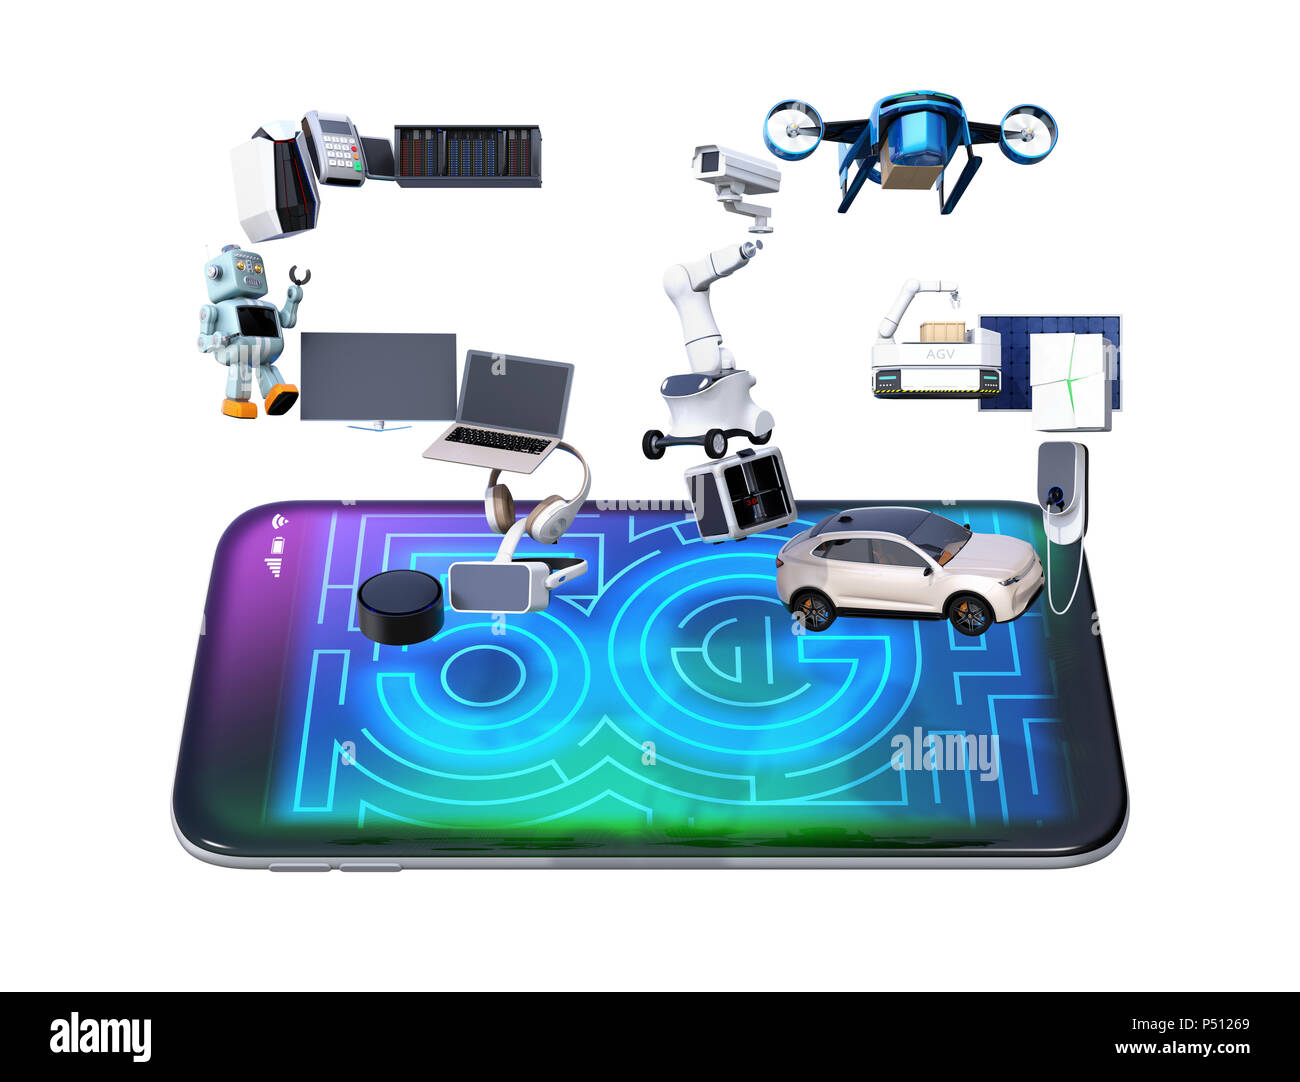 Smart appliances, drone, autonomous vehicle and robot arranged in '5G' text on smart phone, 5G concept. 3D rendering image. Stock Photo